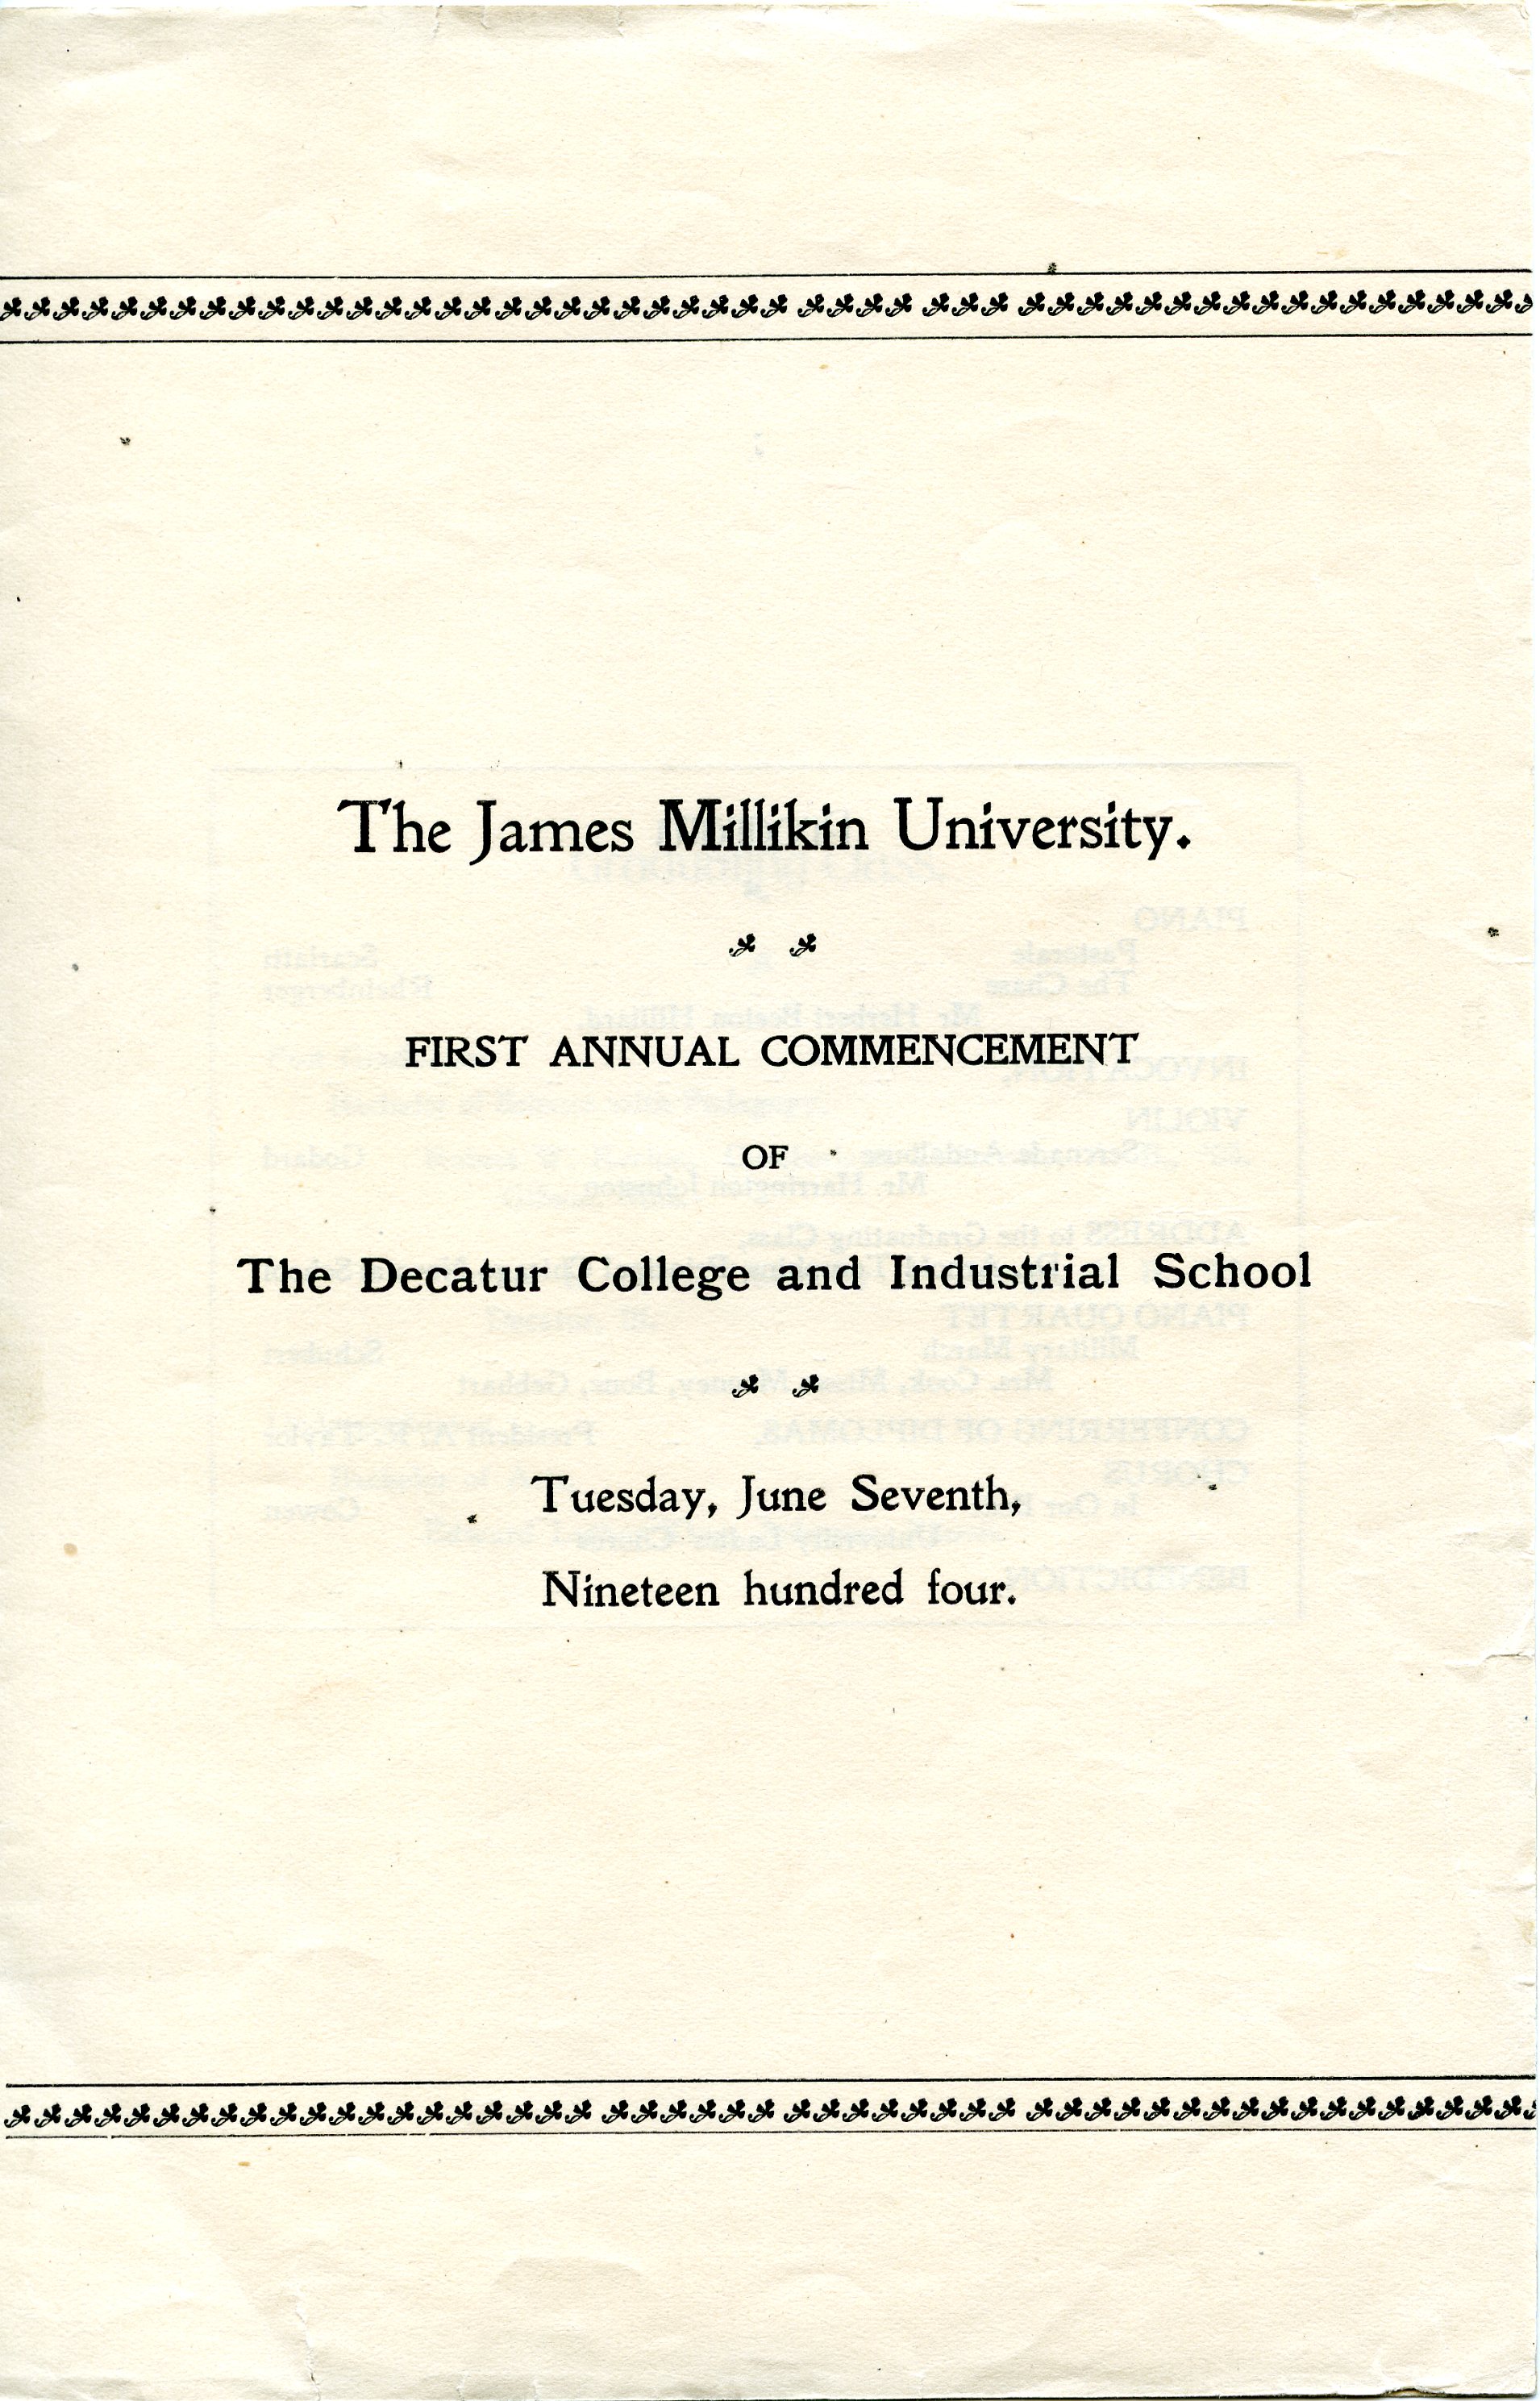 1904 Commencement program cover